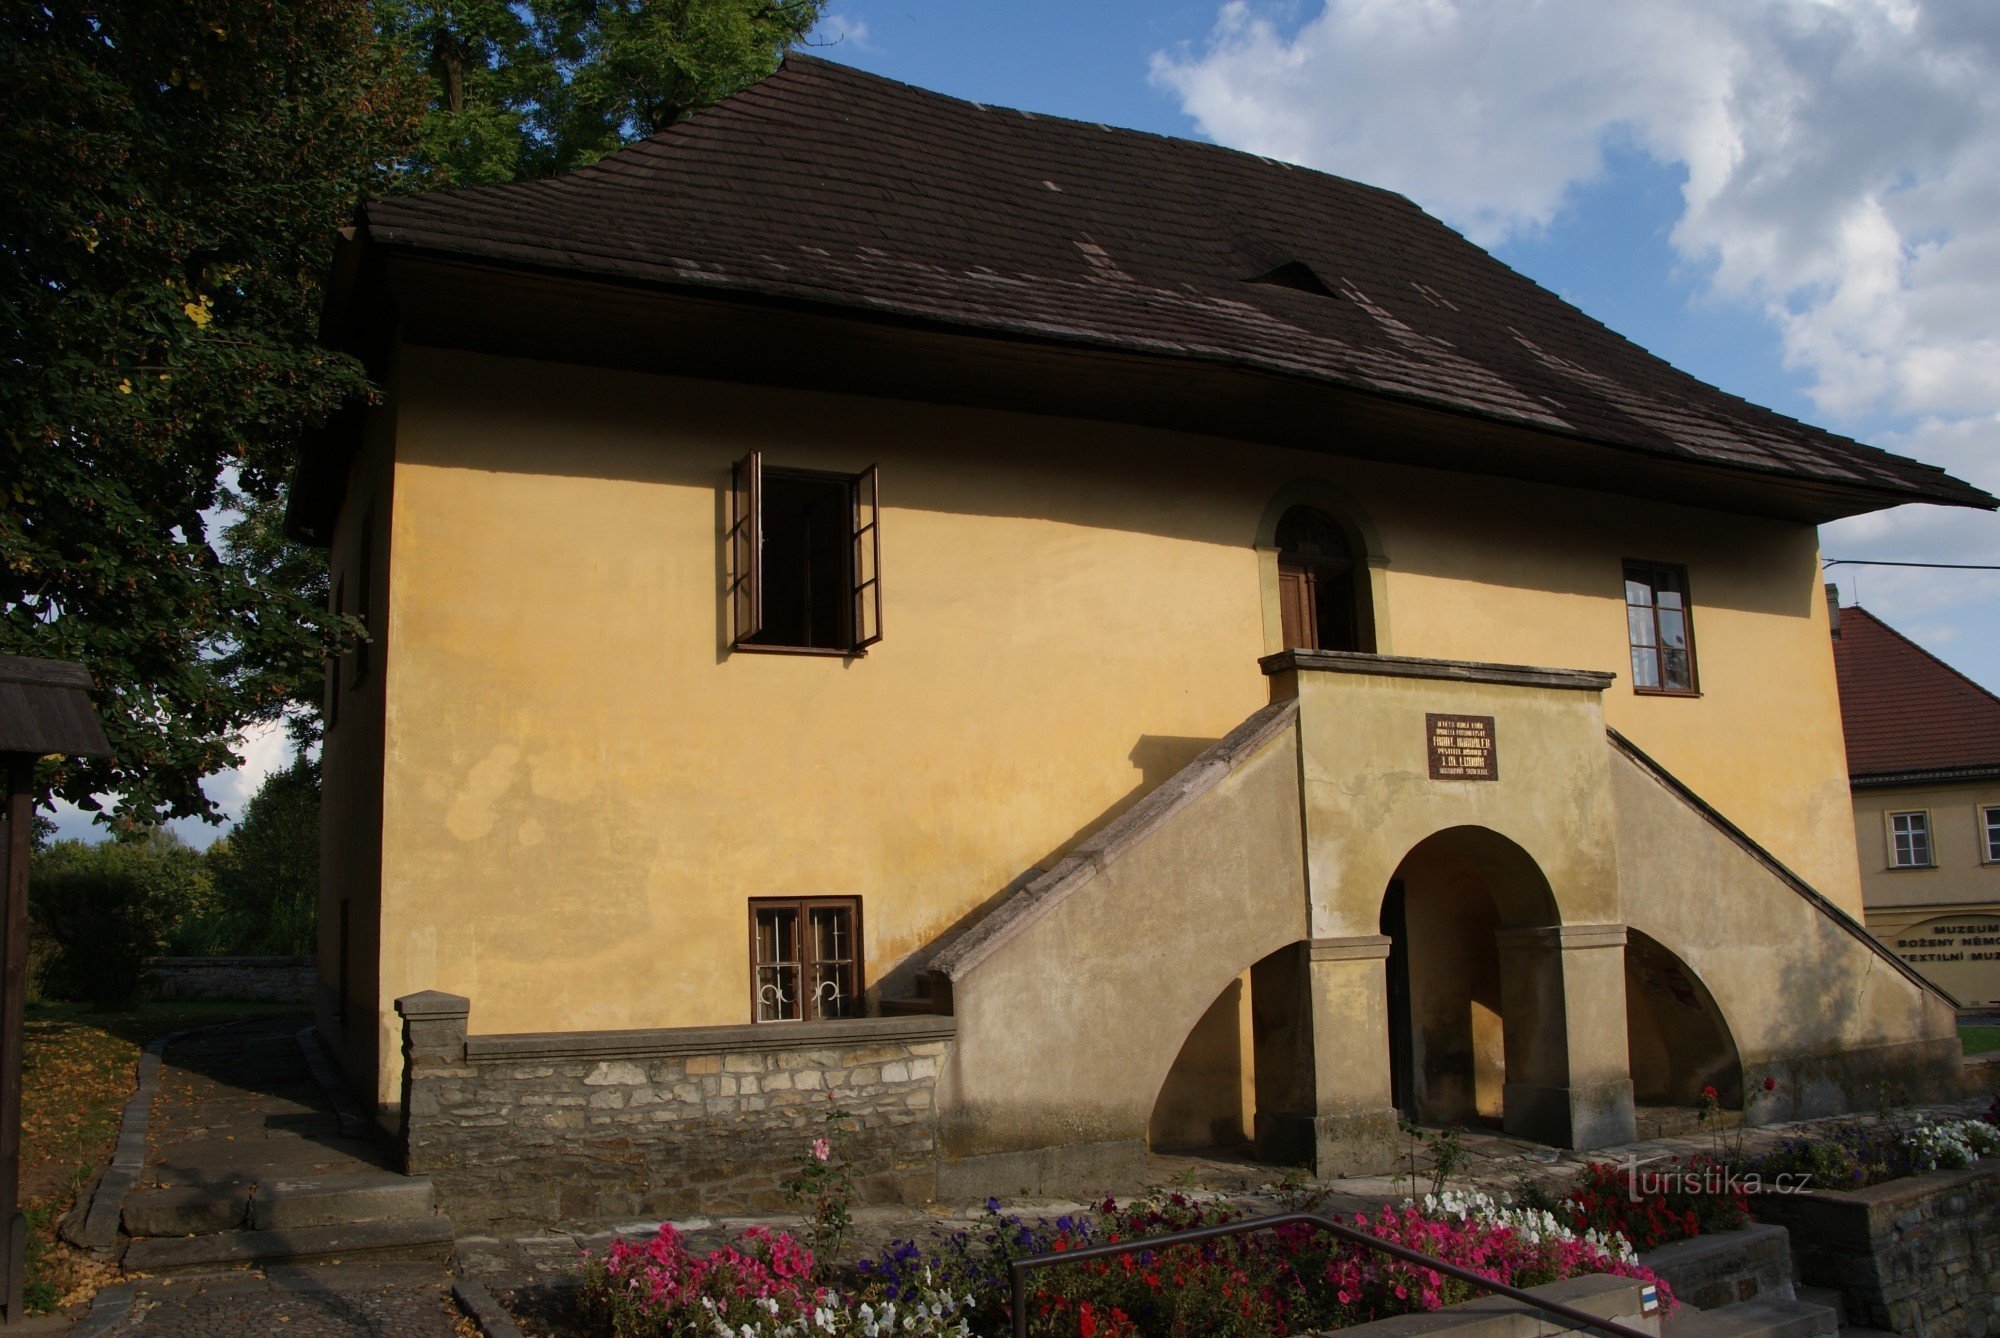 Česká Skalice – baroque "small" rectory